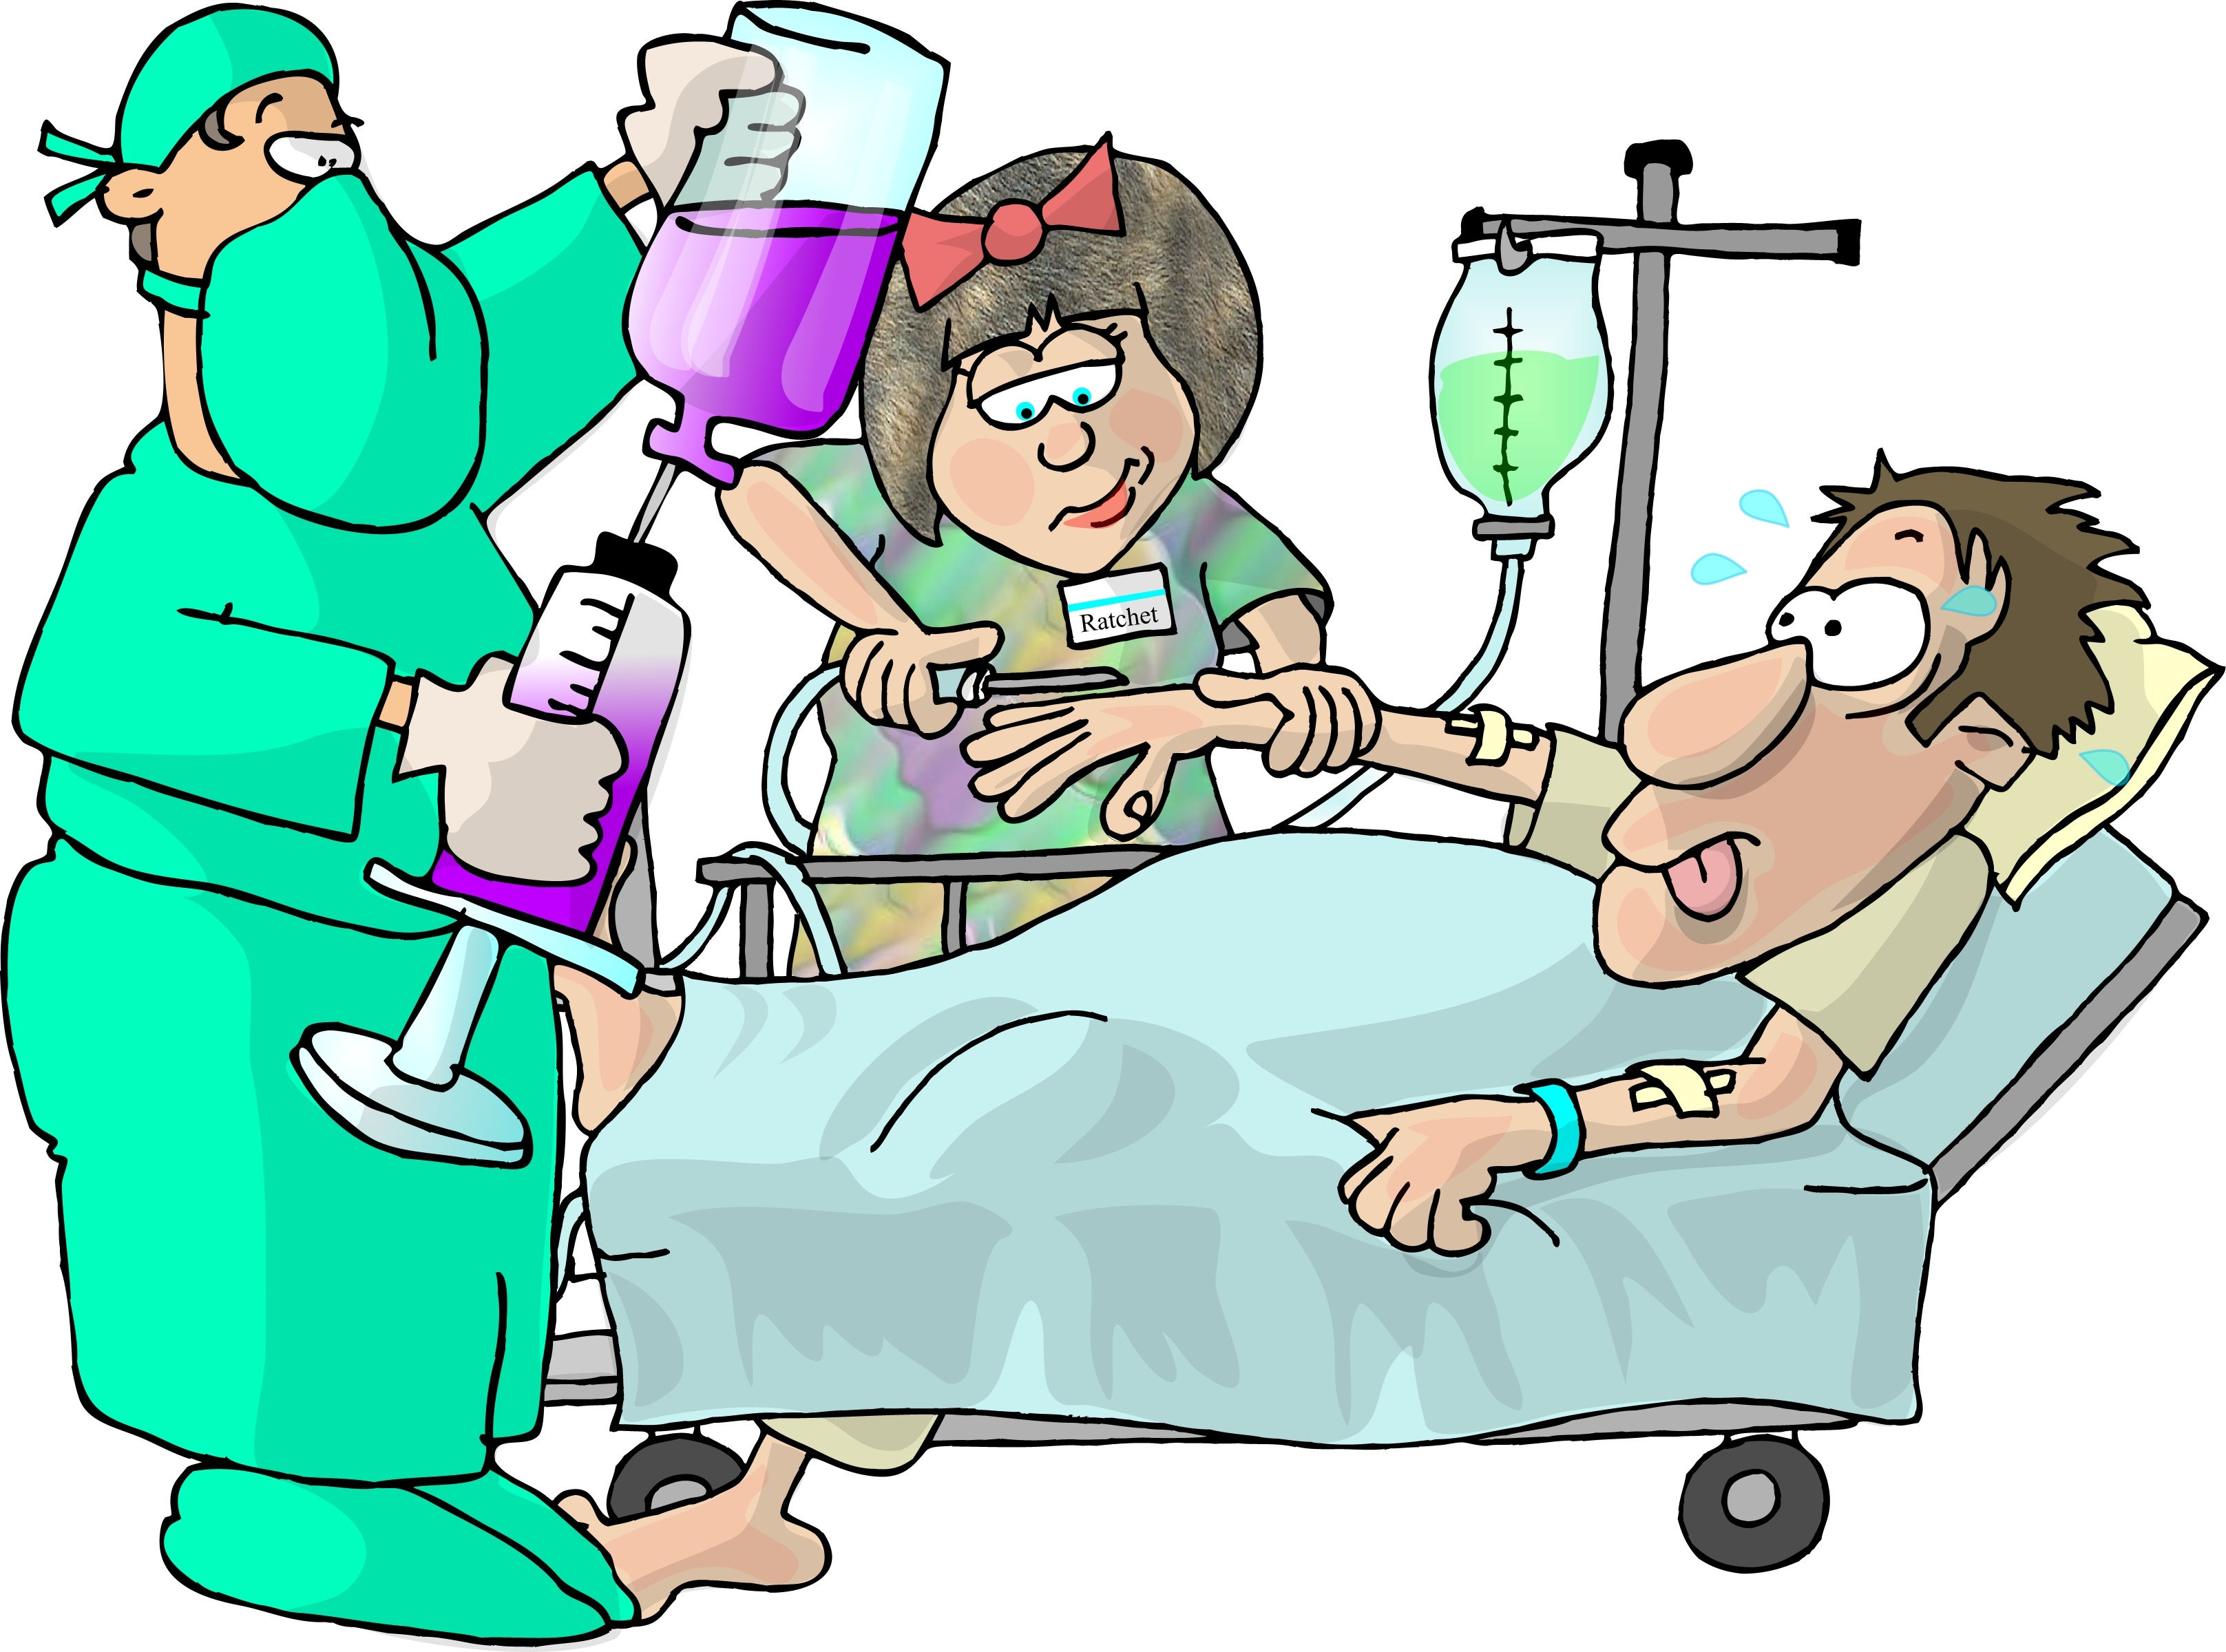 Free Cartoon Nurses Images, Download Free Cartoon Nurses Images png